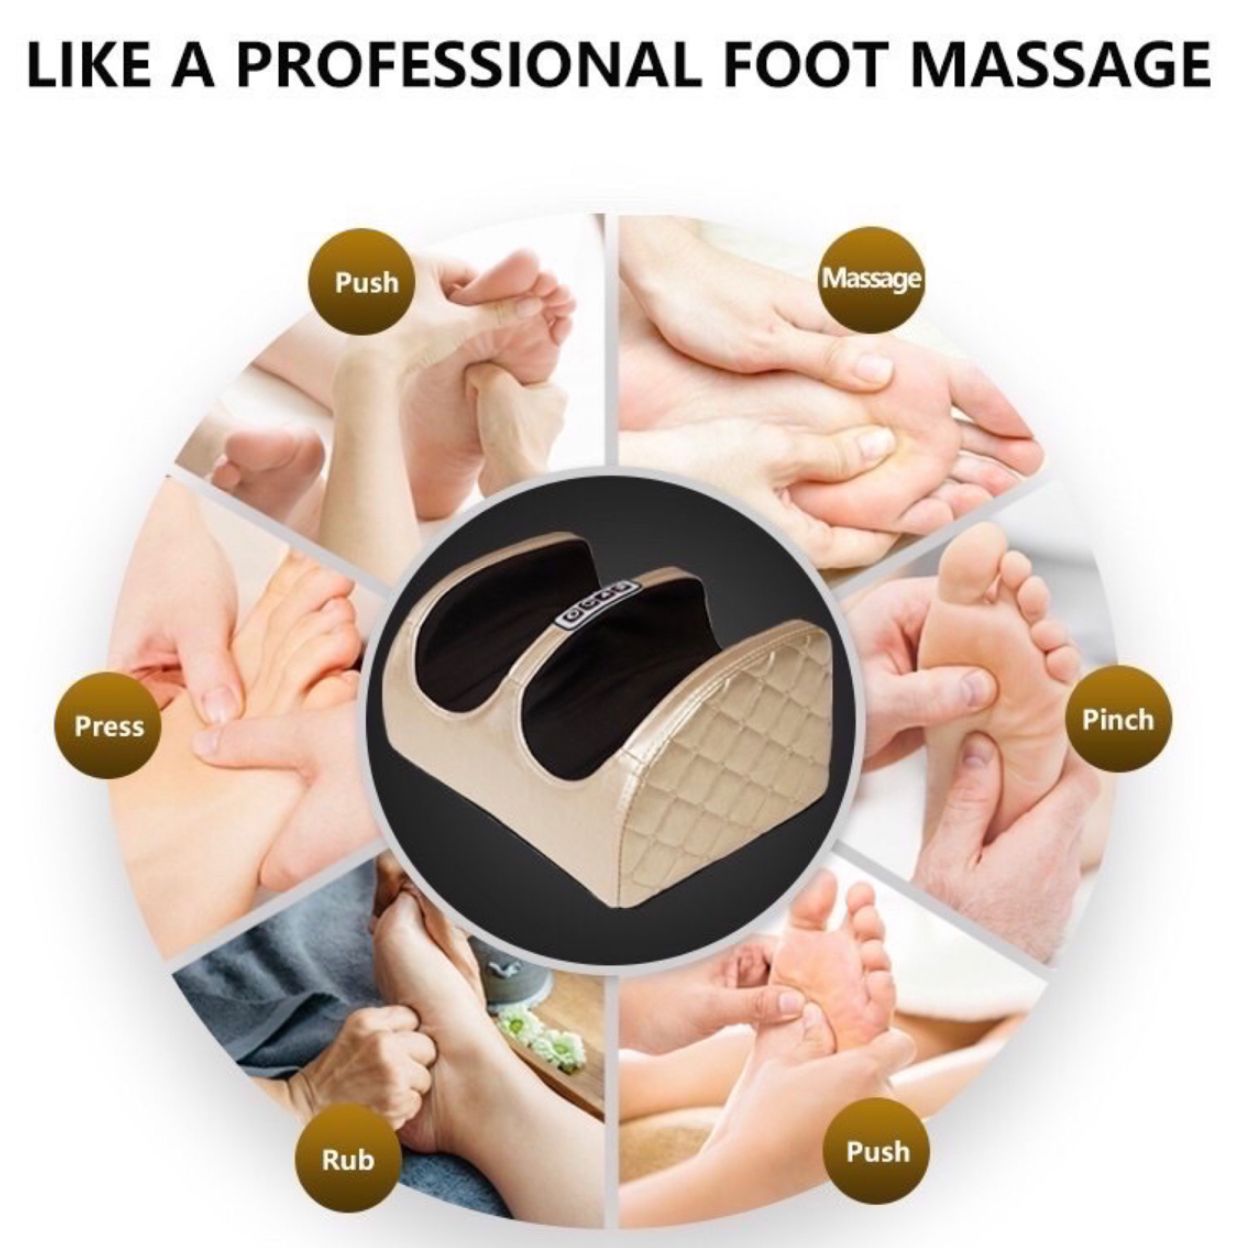 Multi-Functional Comfort Heating Foot Massager Reflexology